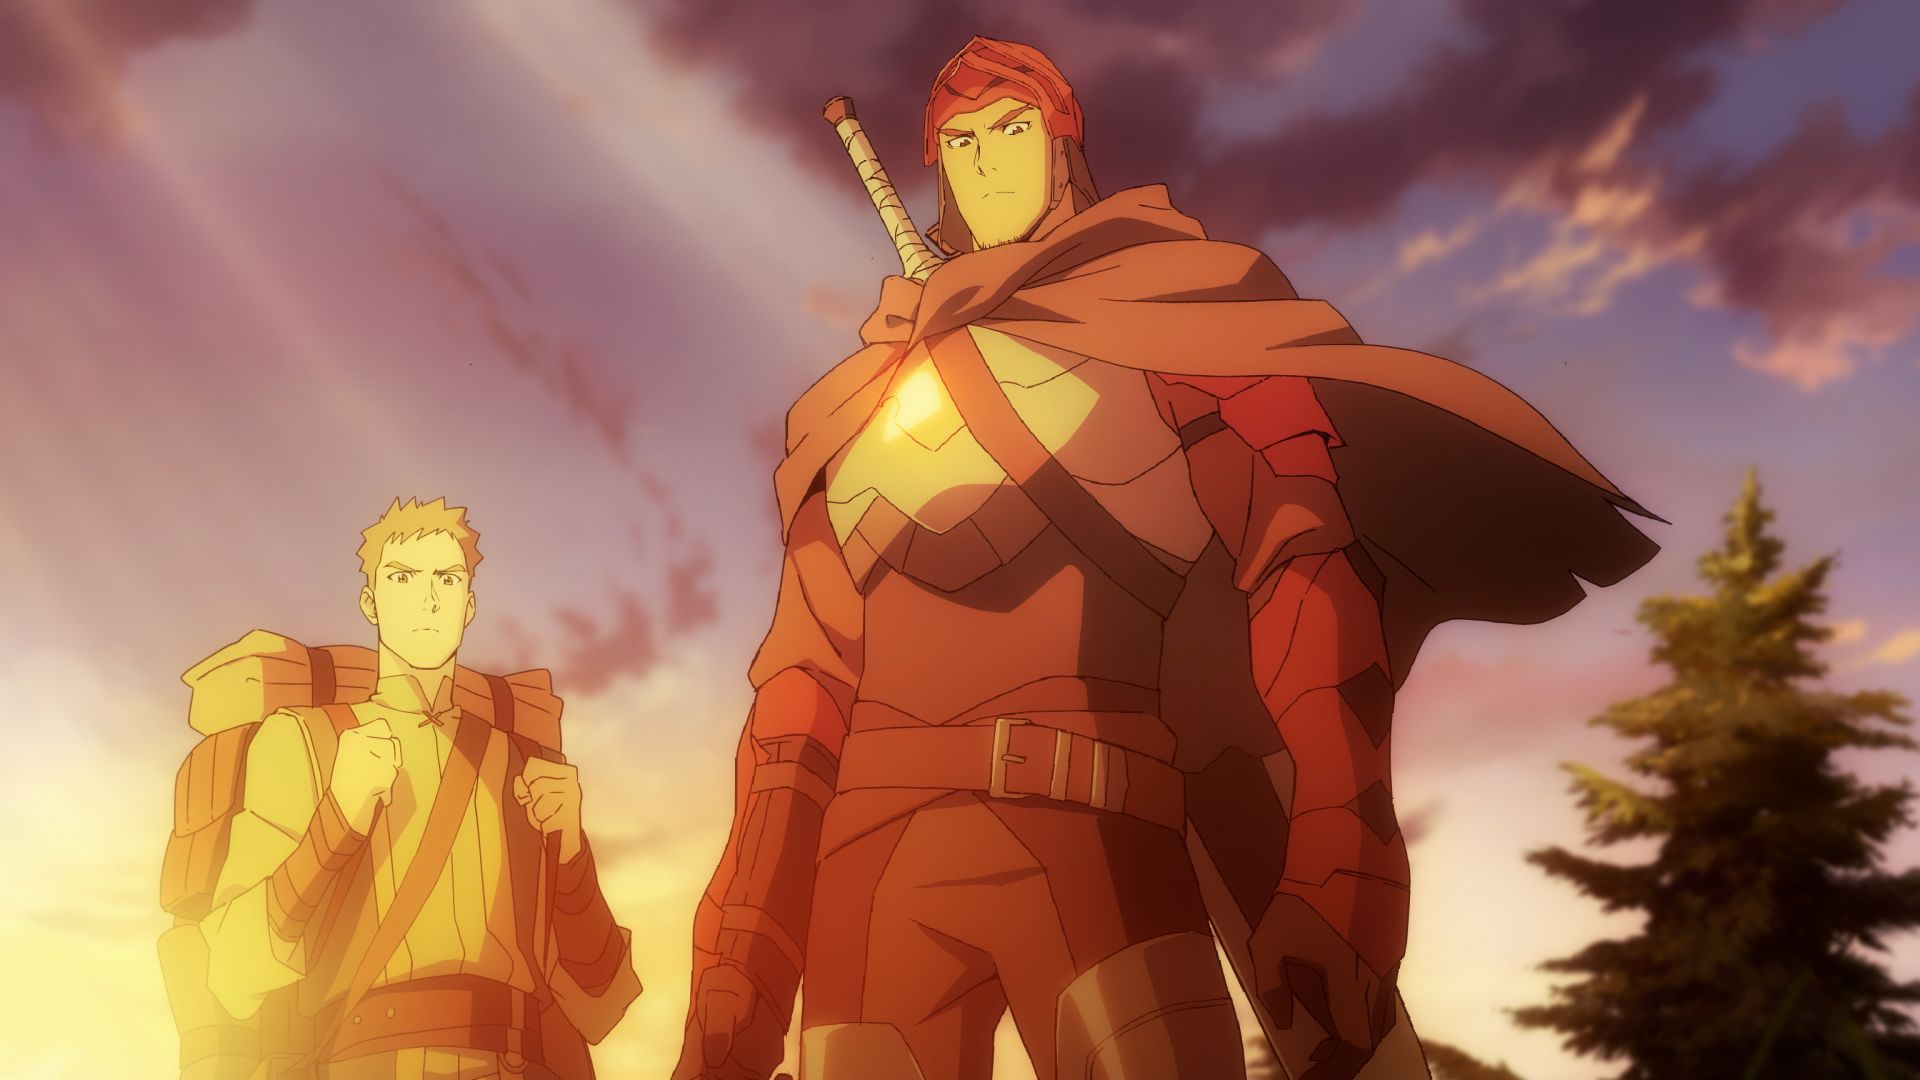 DOTA: Dragon's Blood': Netflix Announces Anime Series Based On Valve Video Game